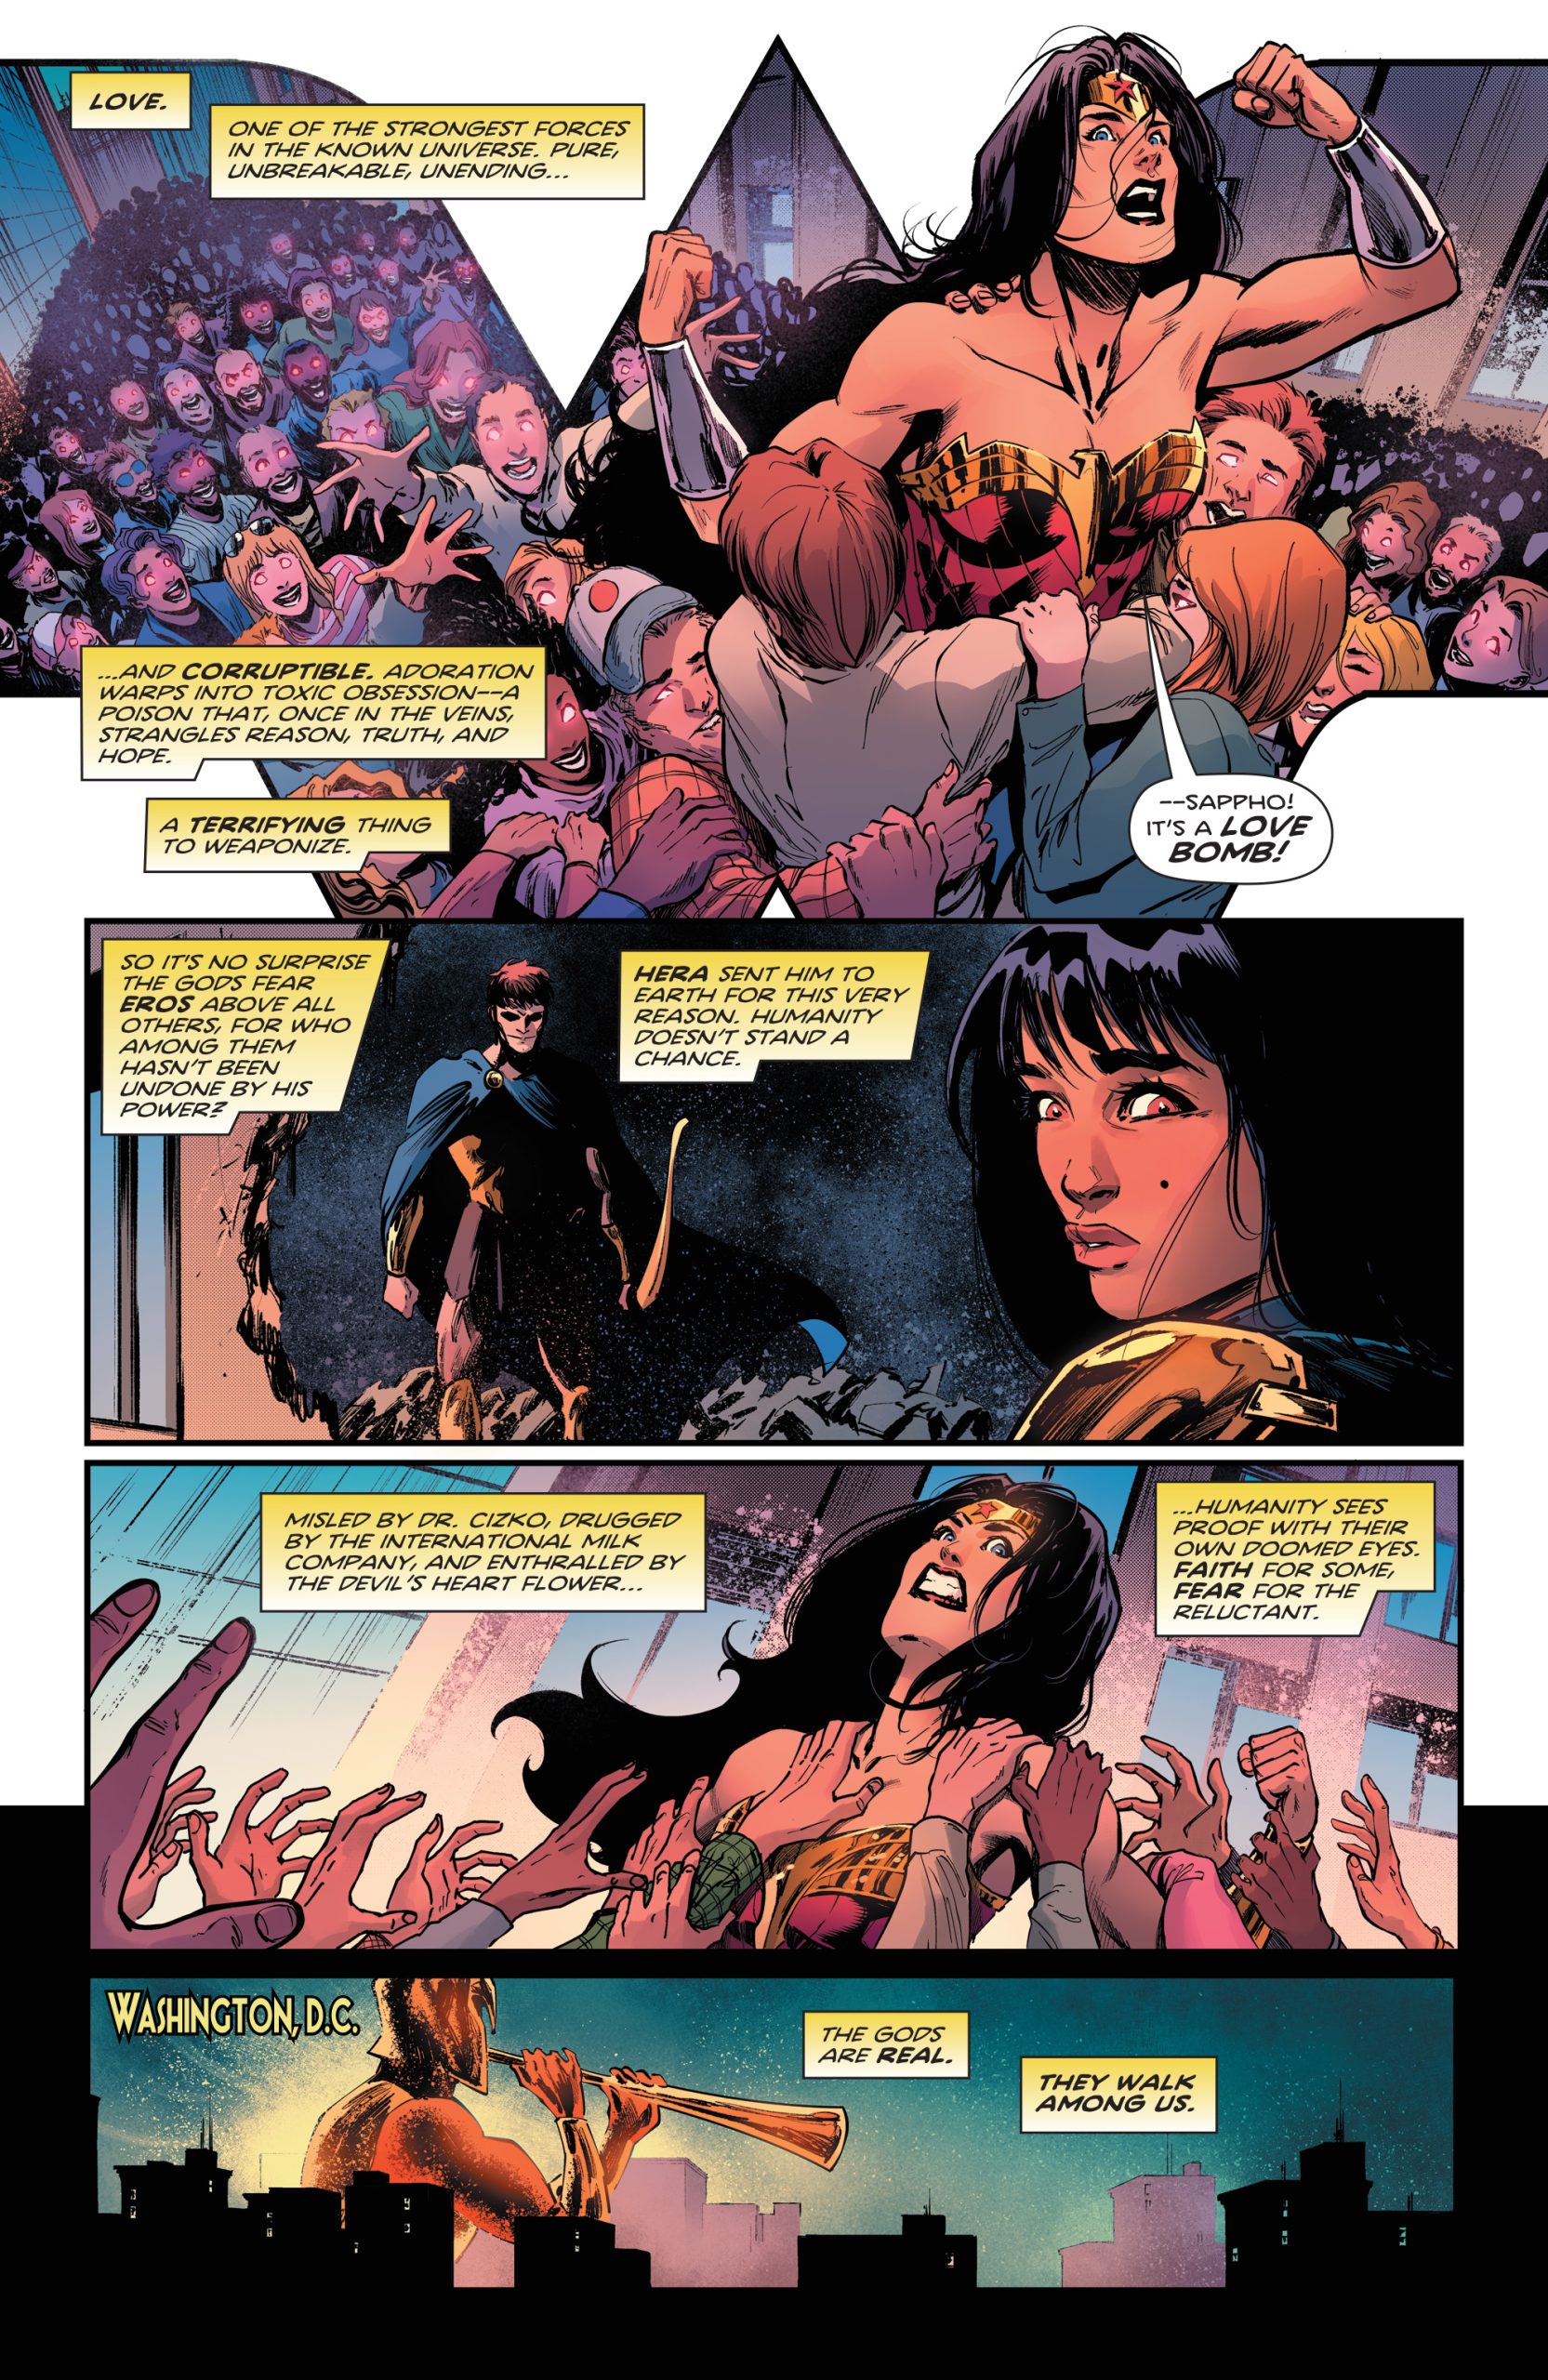 Movie Review: Wonder Woman: Bloodlines - ComicsOnline